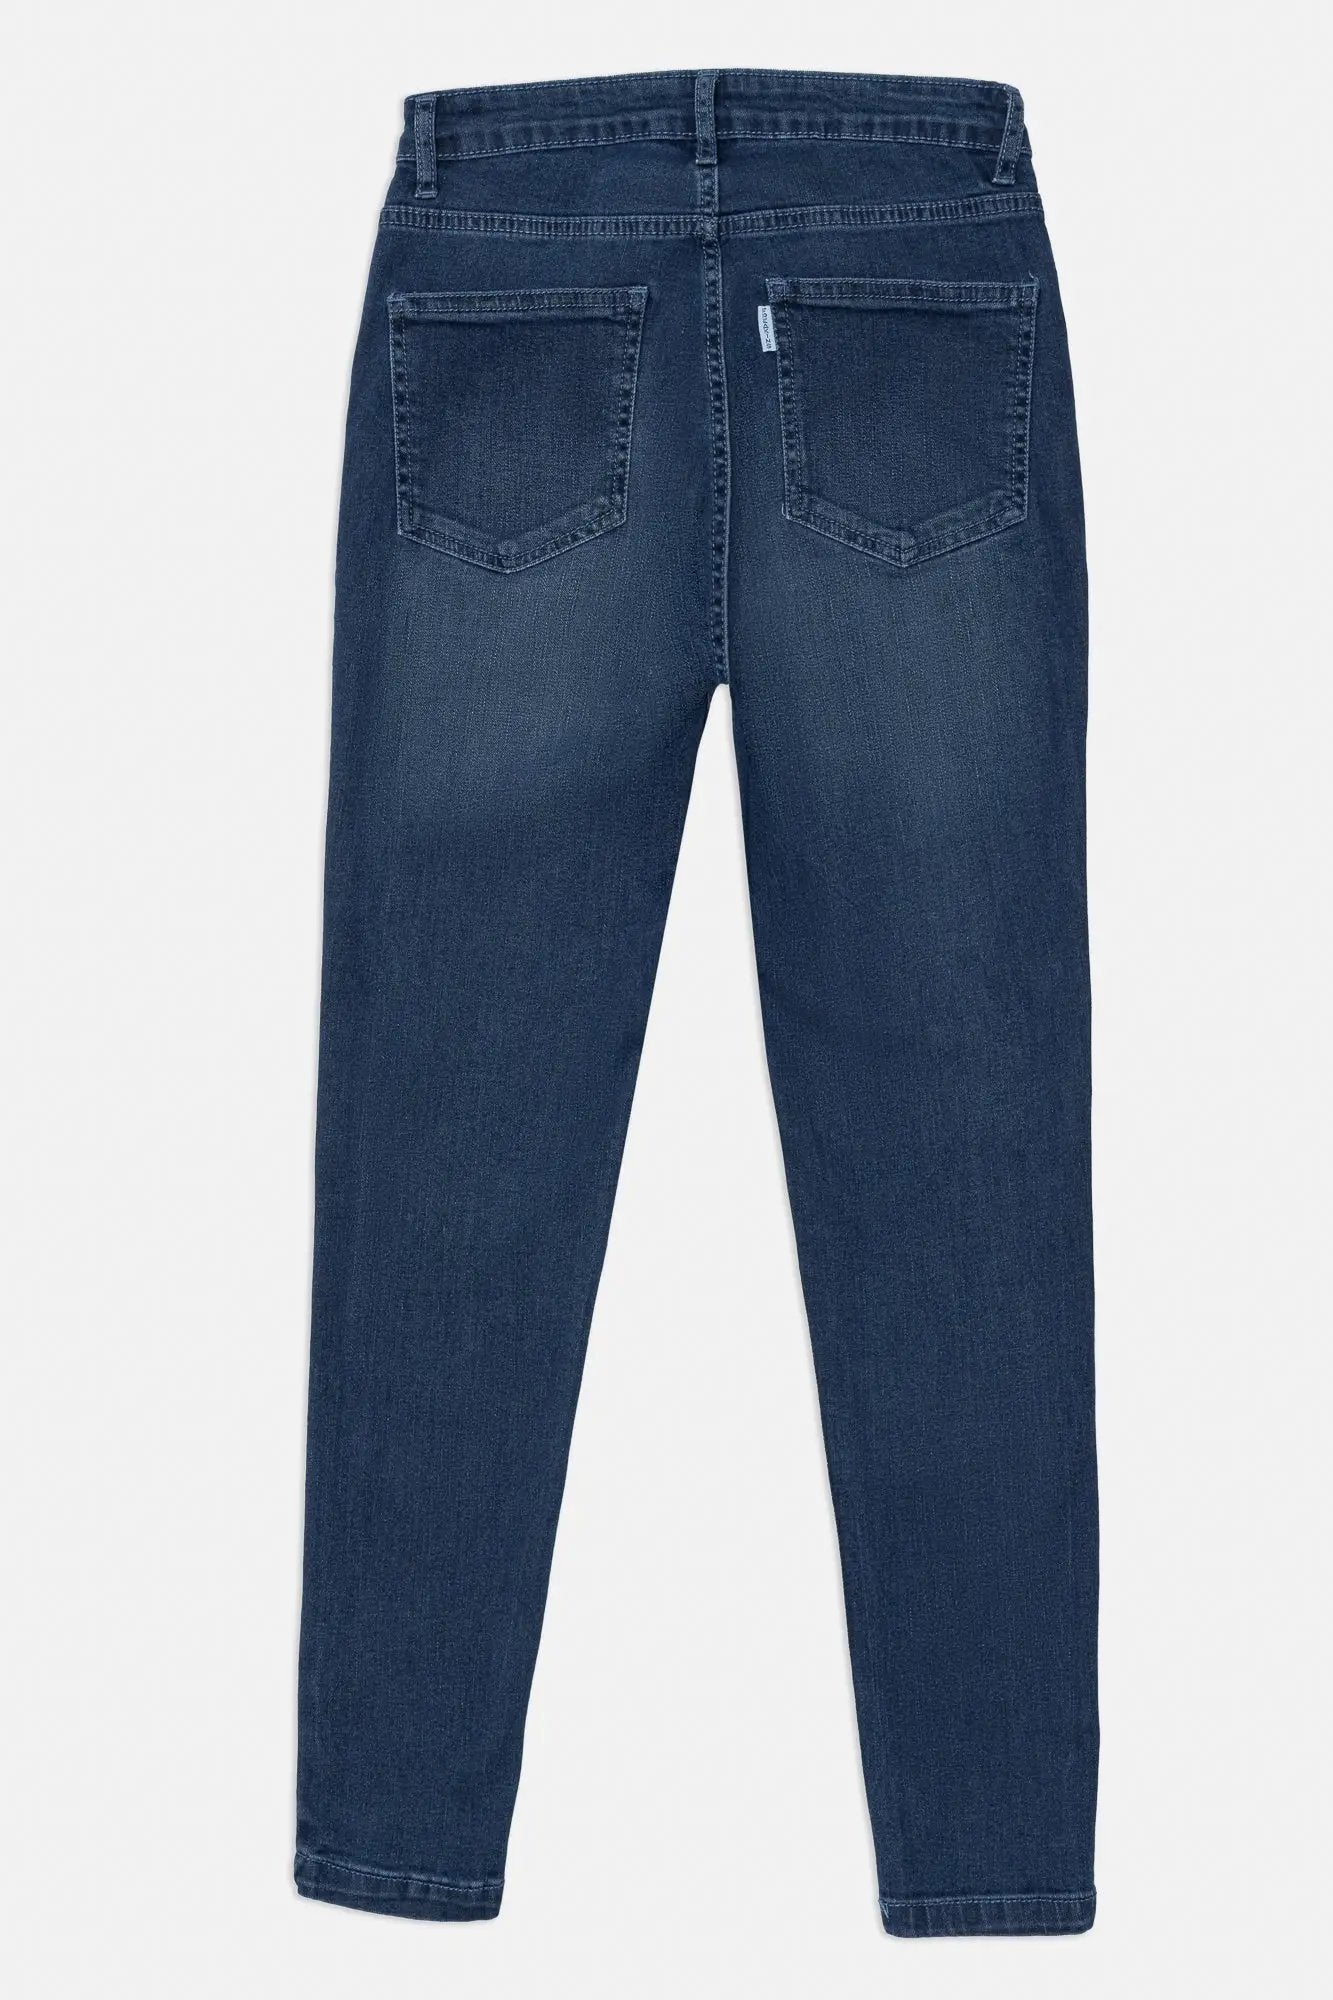 Basic B4 Jeans – Jetlycot